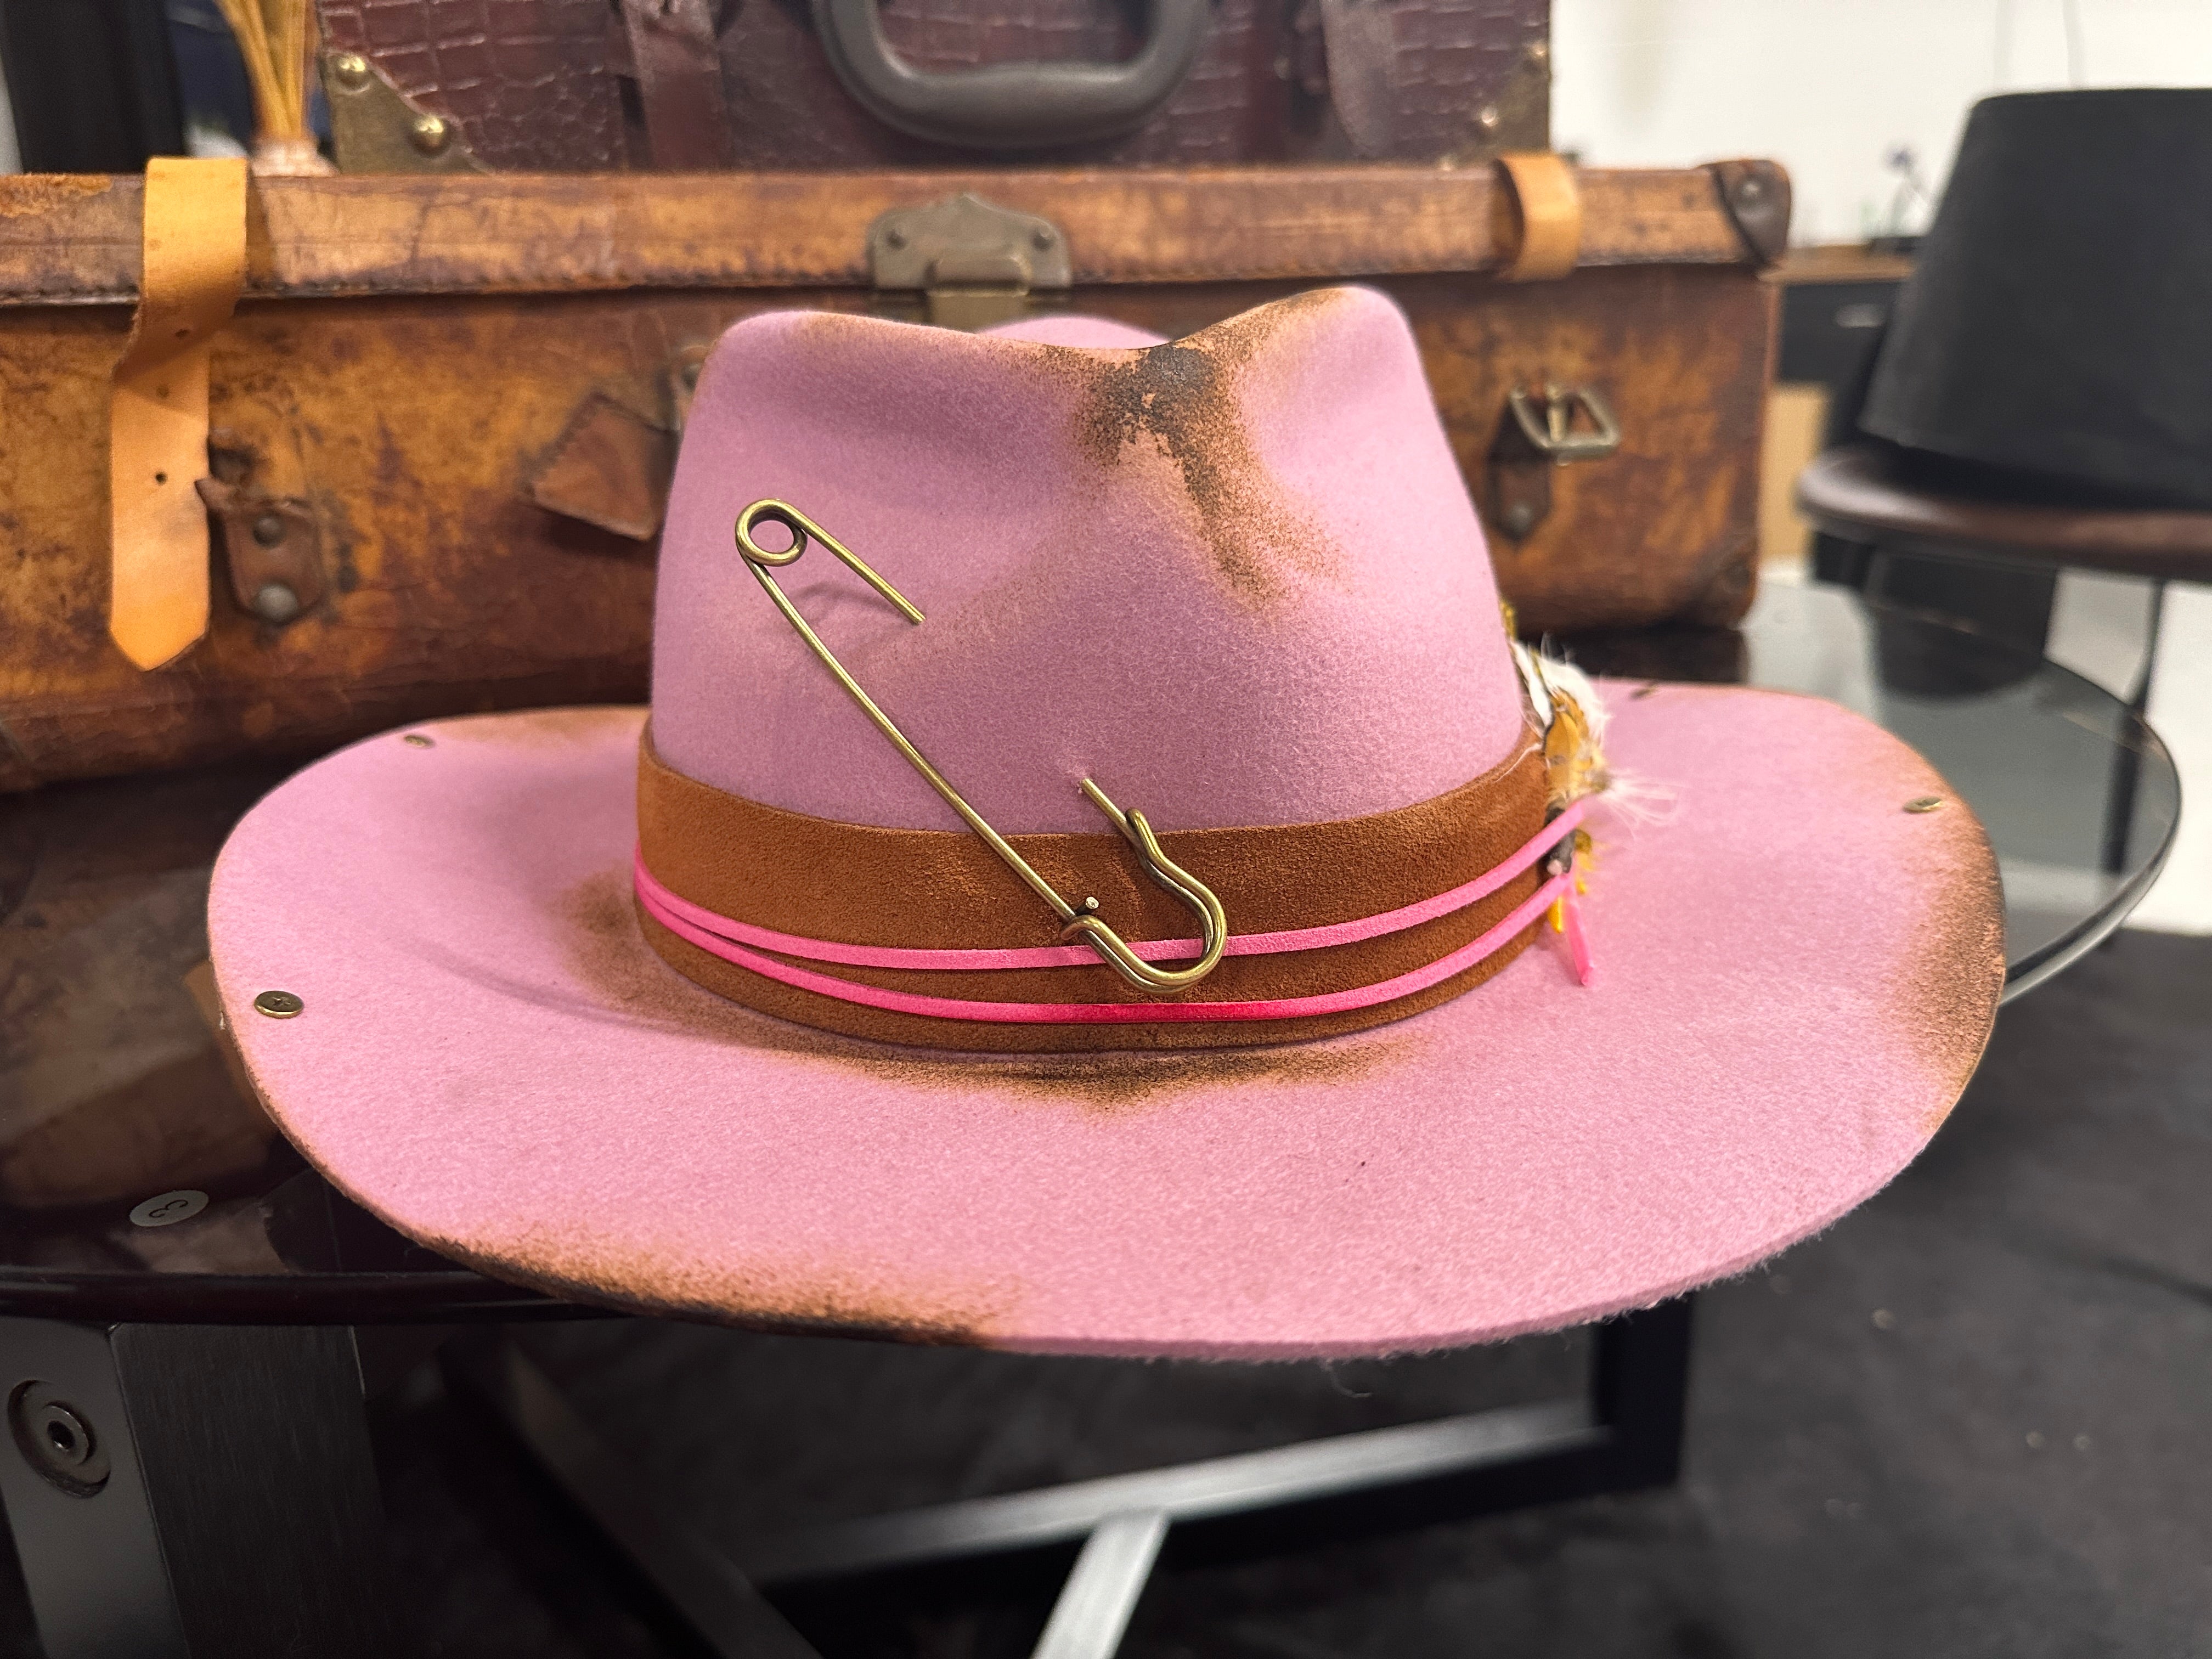 L - Pink snakeskin cowboy